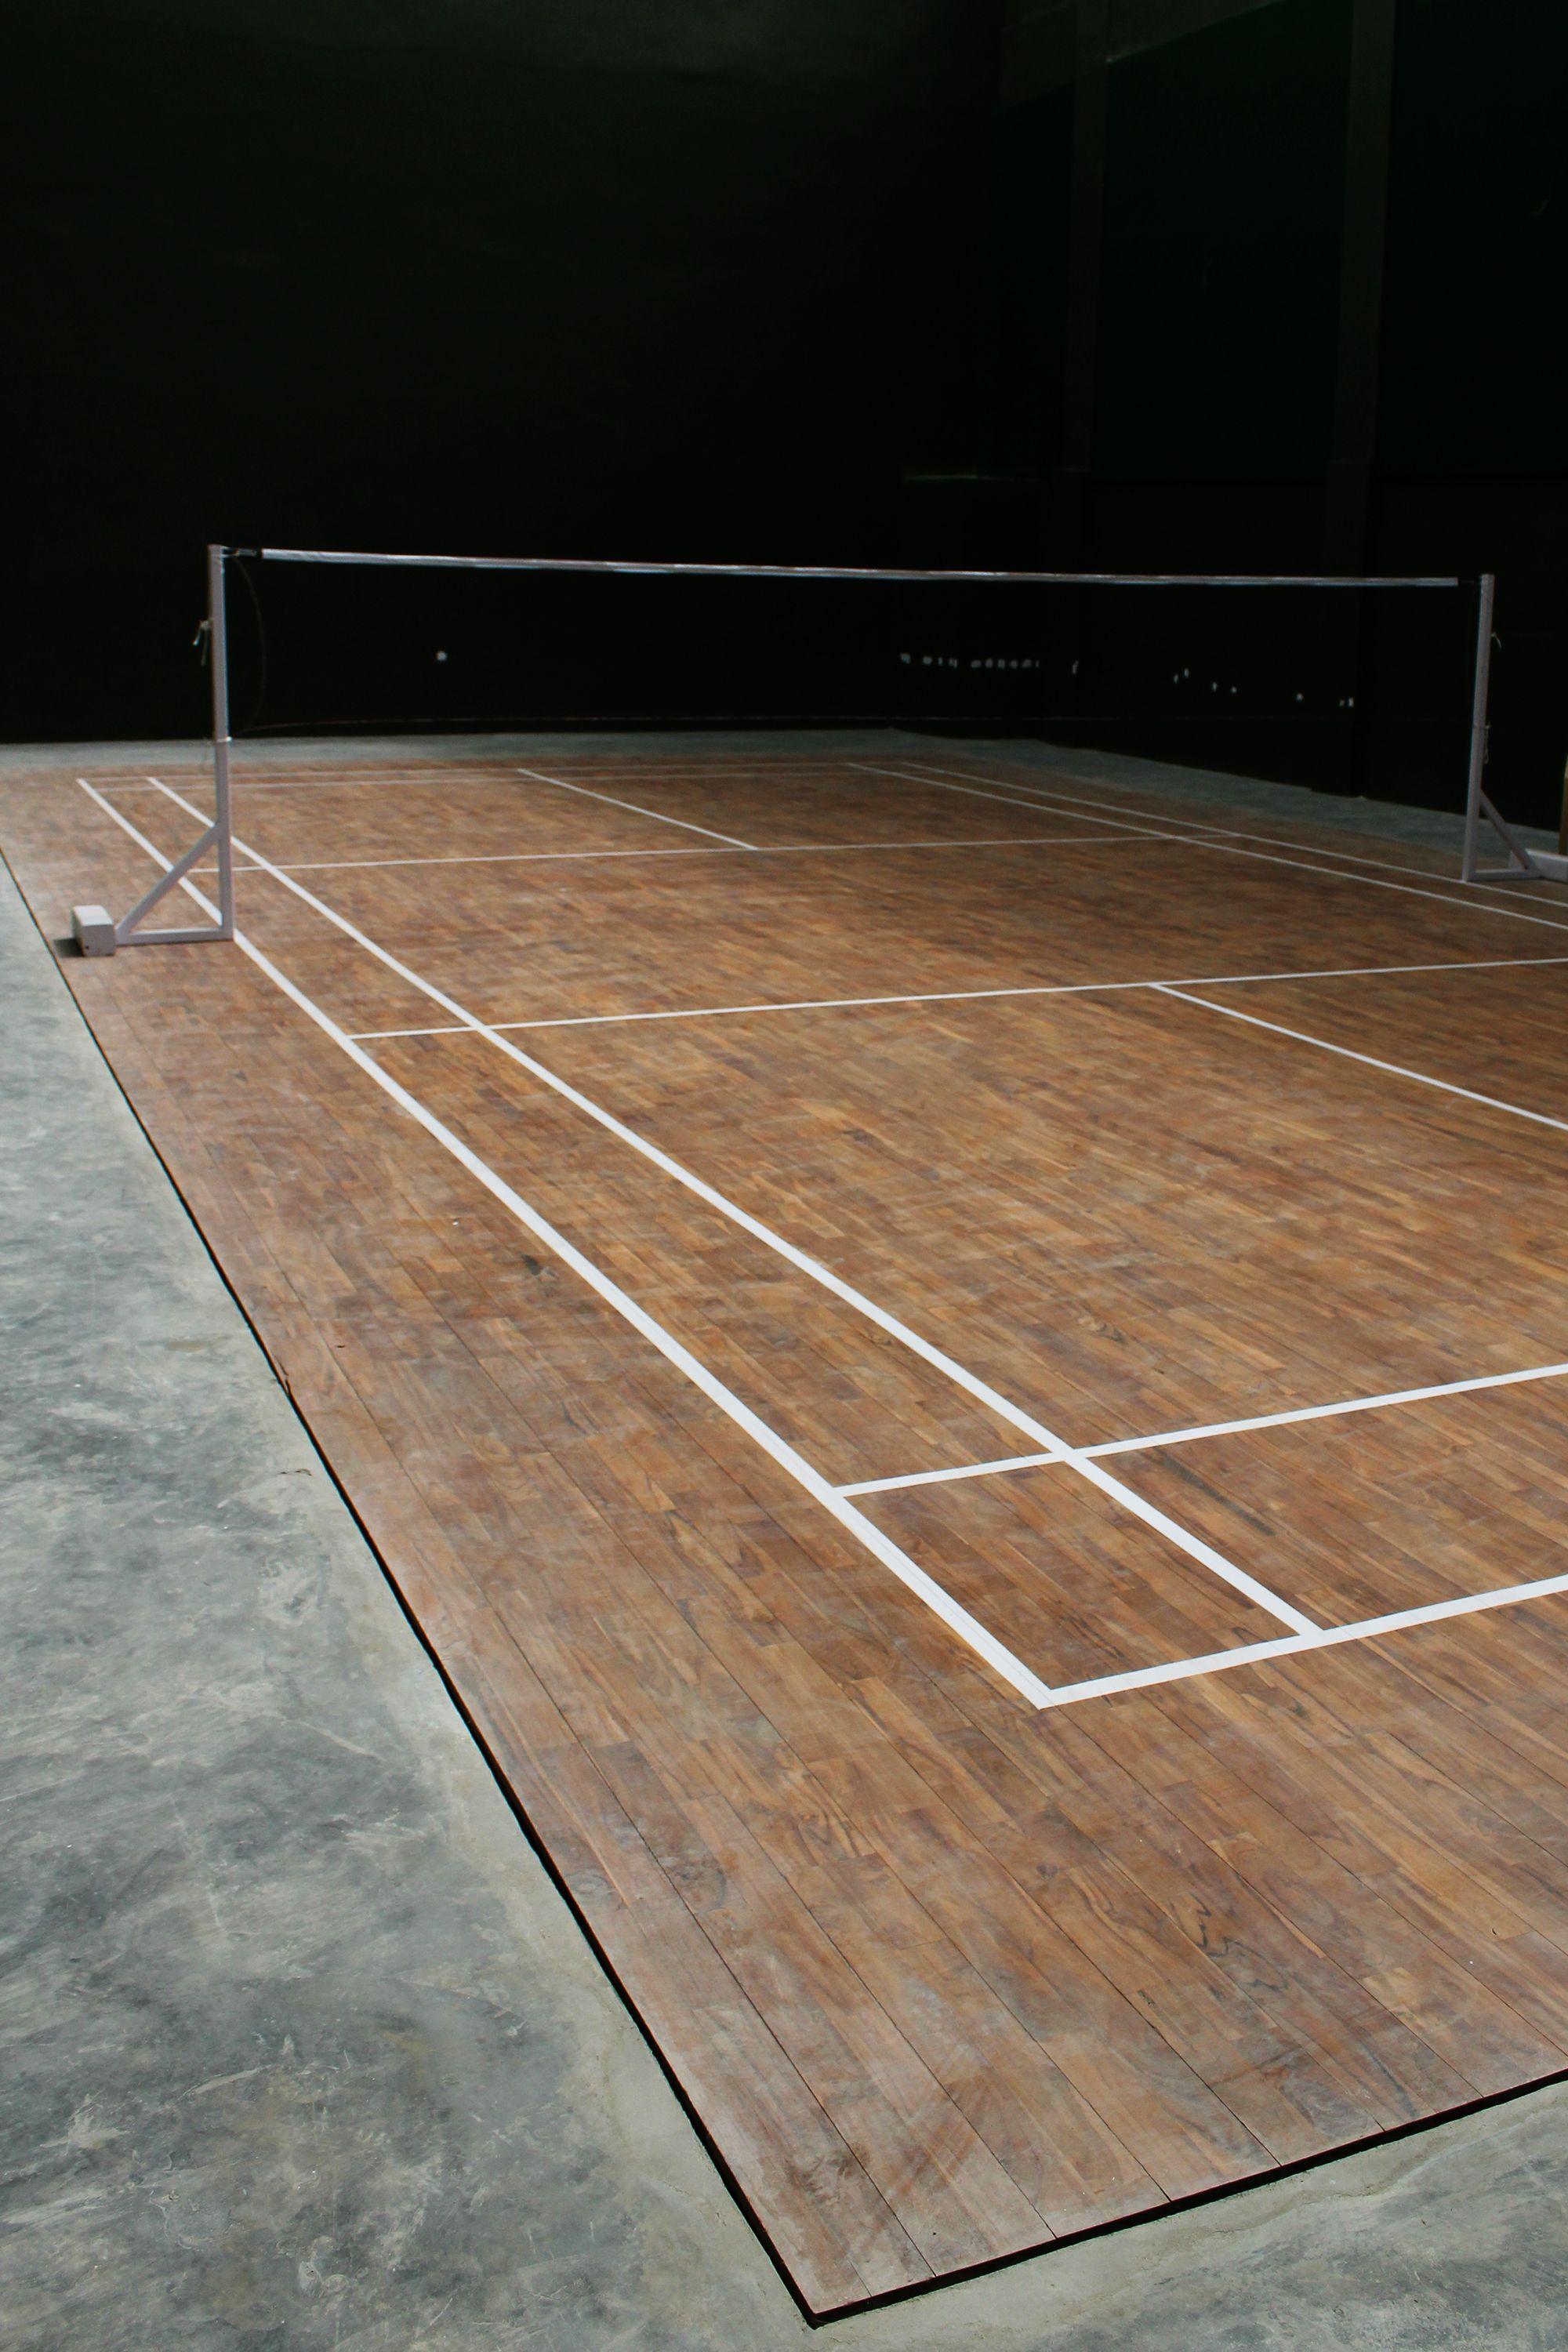 Wood Surface Badminton Court